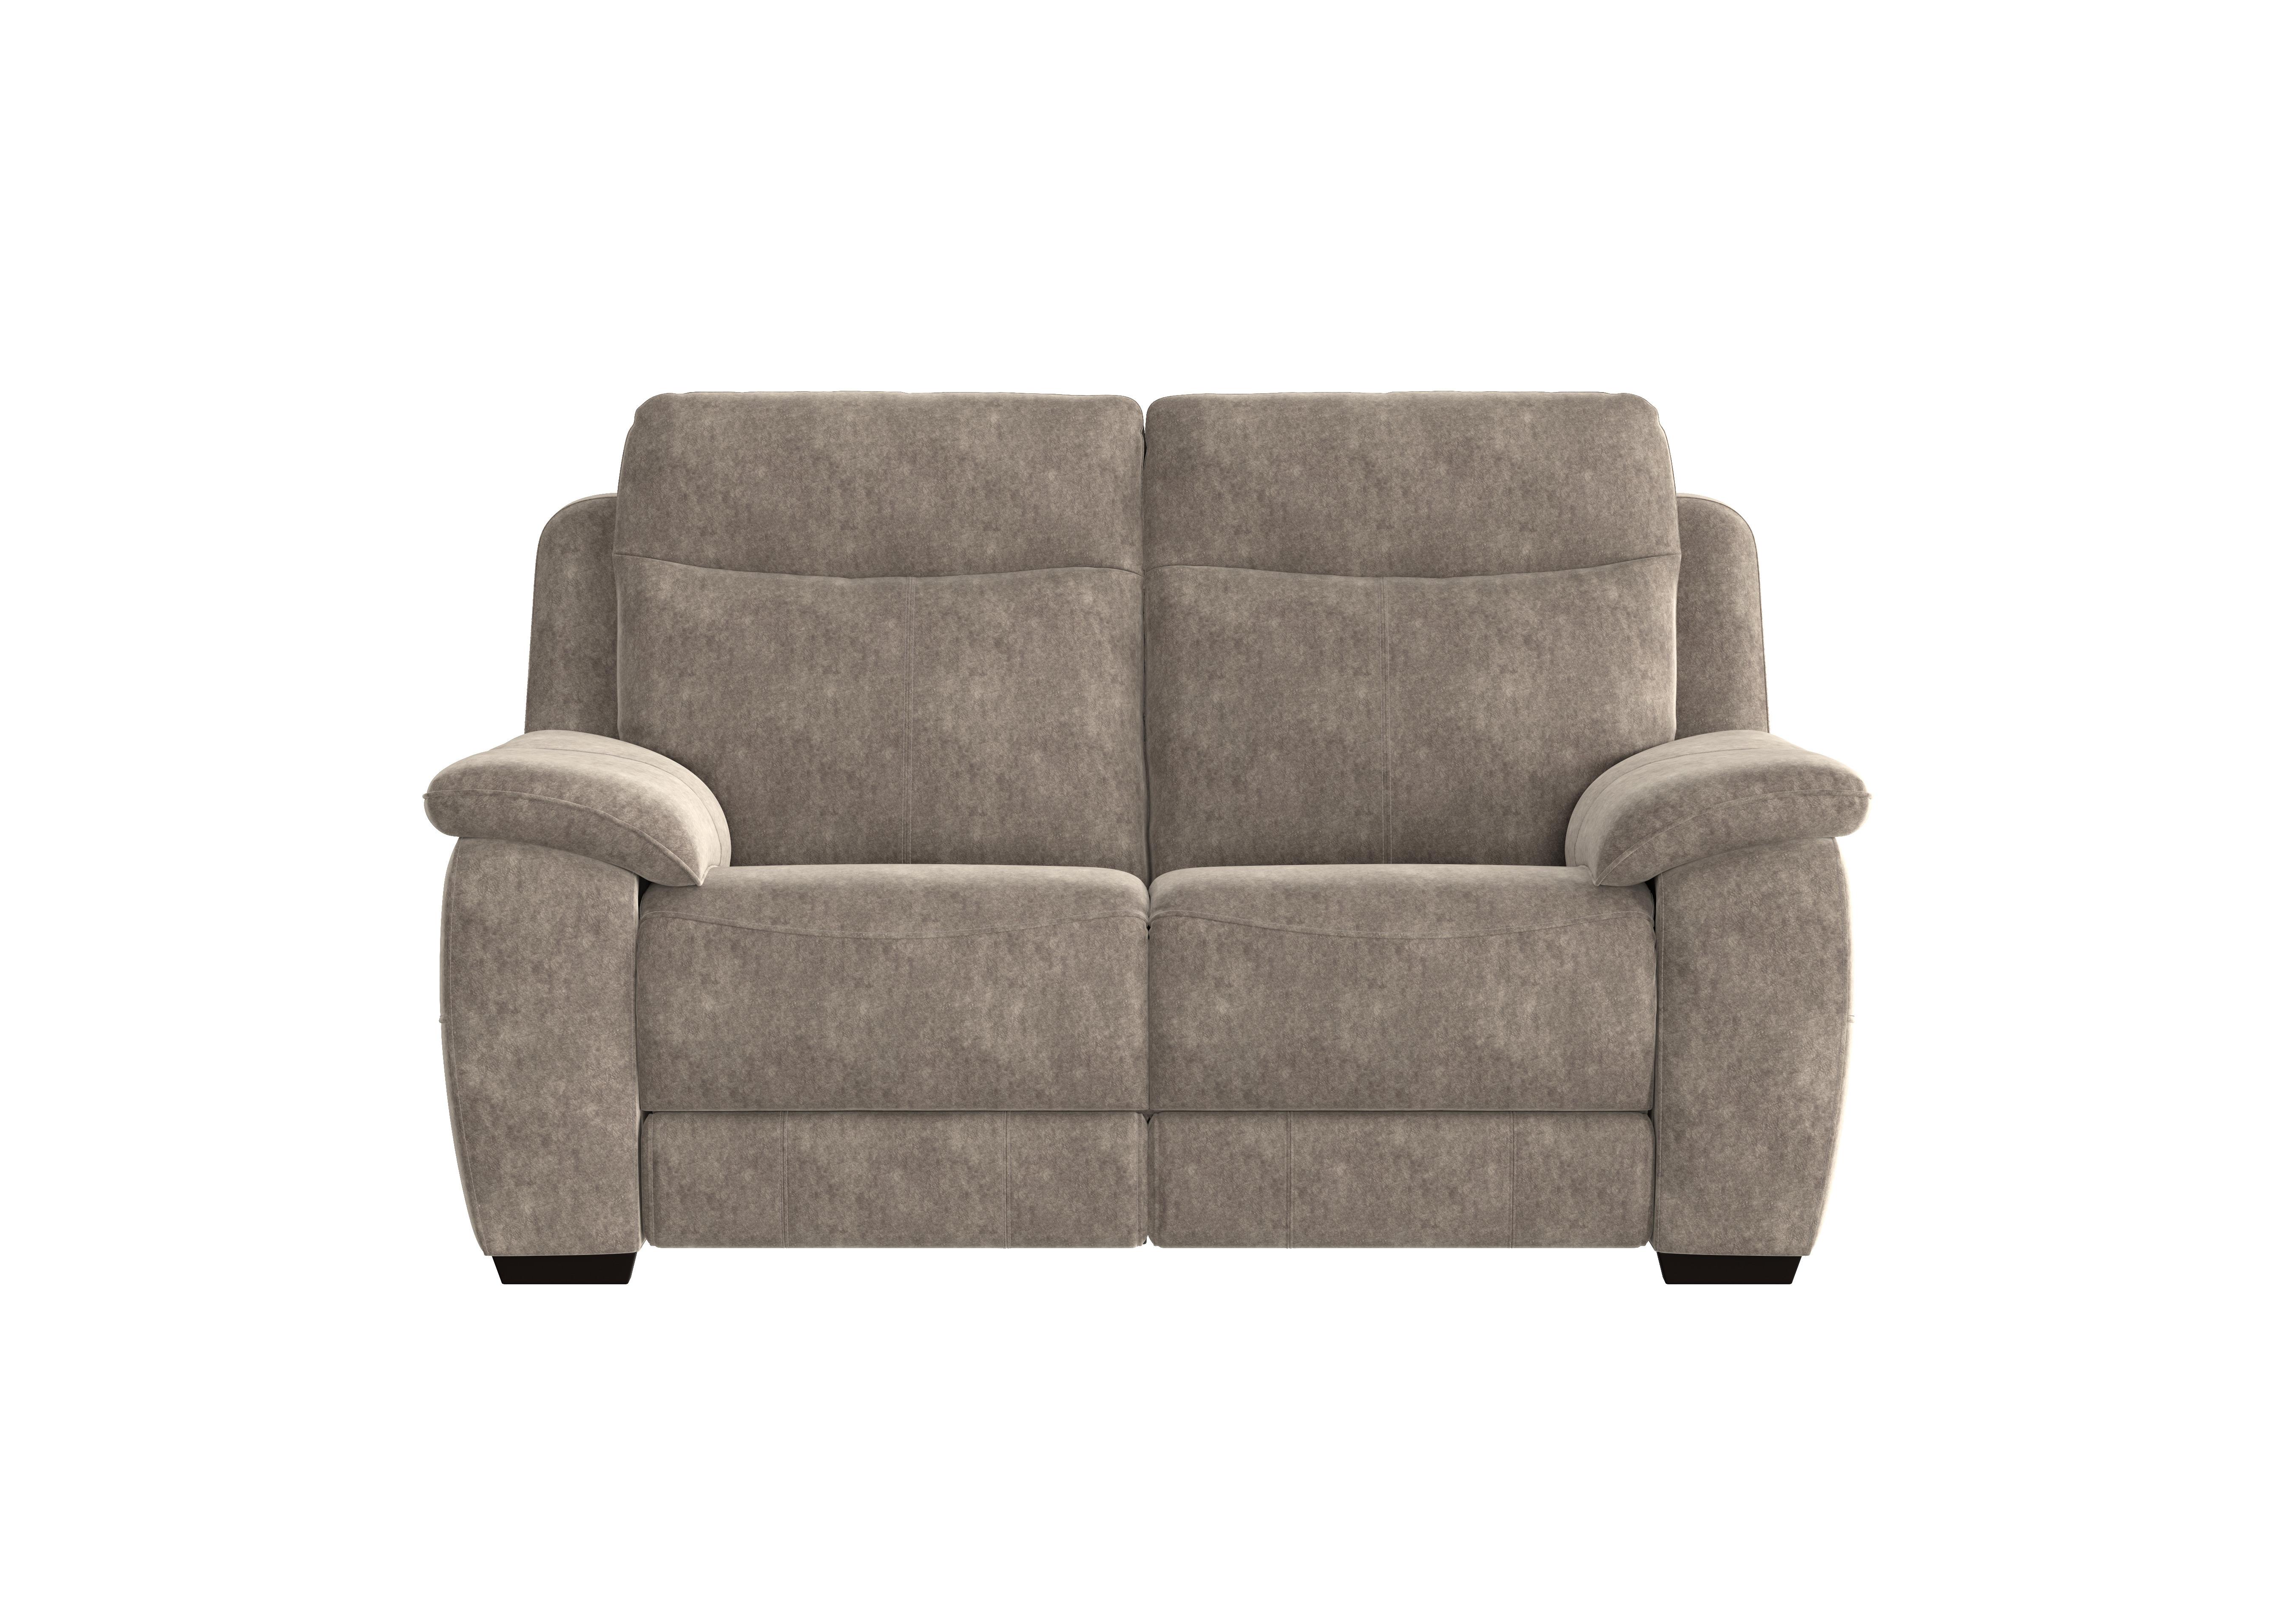 Starlight Express 2 Seater Fabric Sofa in Bfa-Bnn-R29 Fv1 Mink on Furniture Village